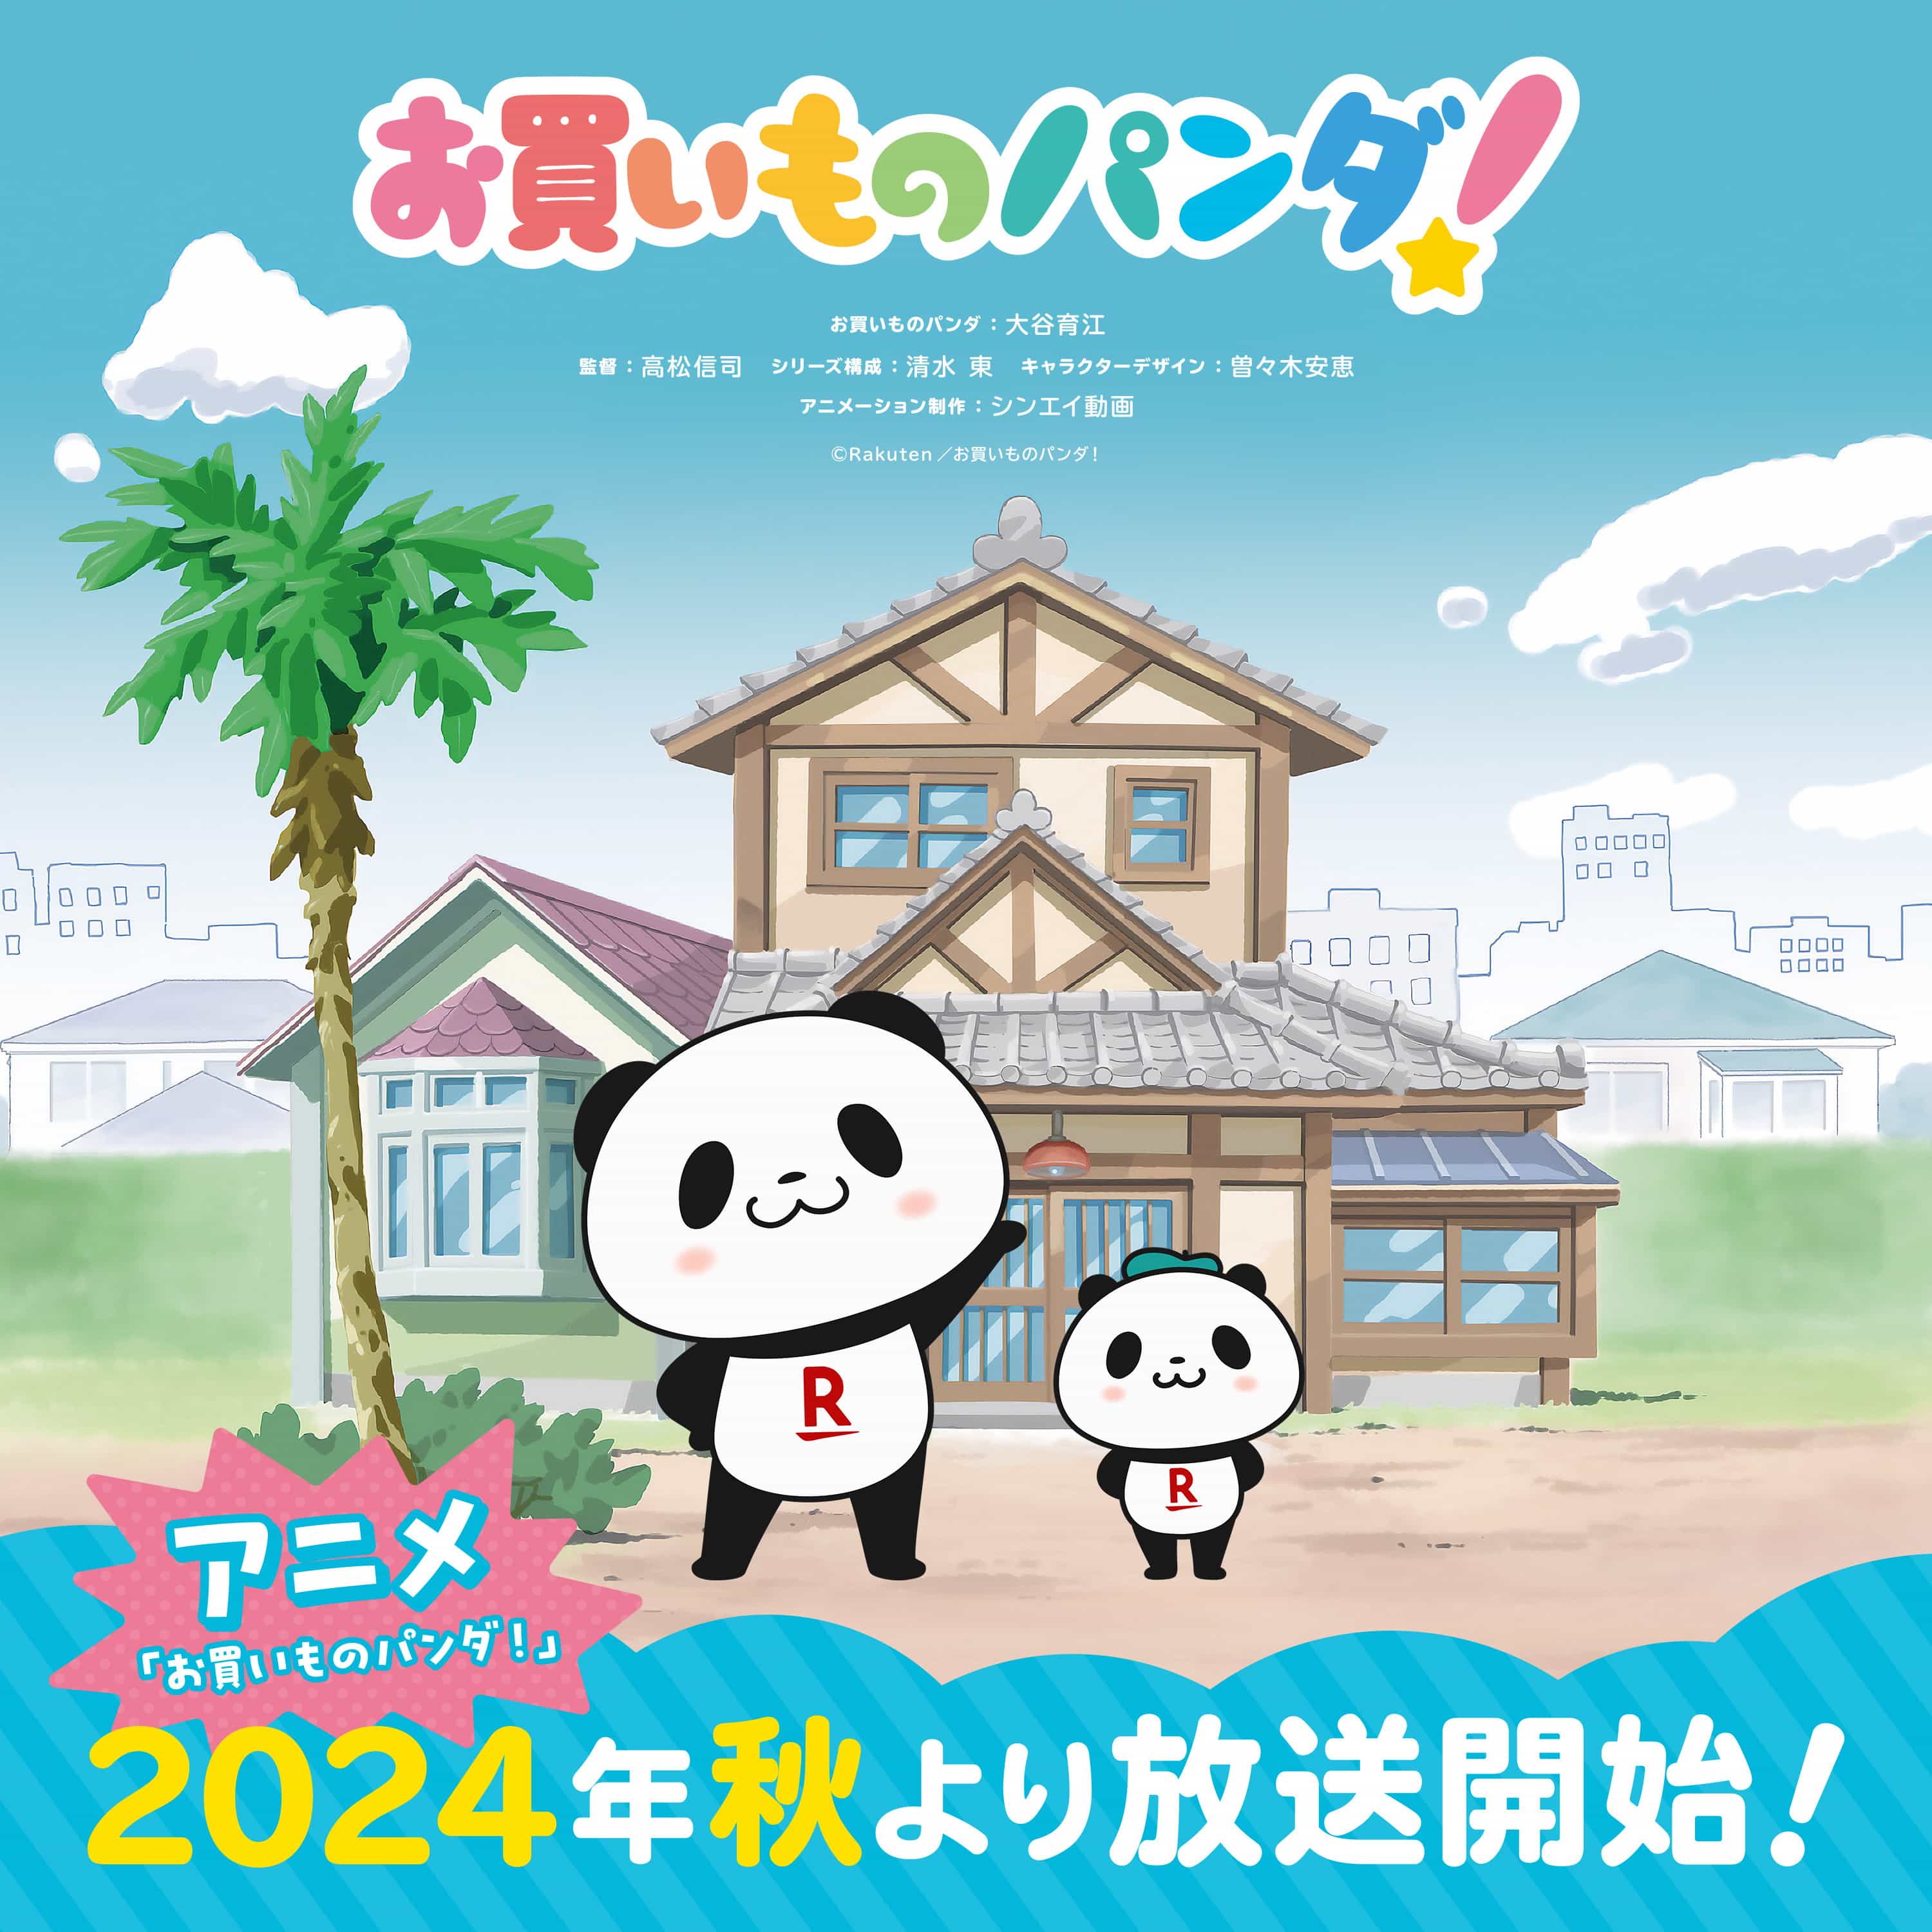 2024年乐天官方角色·购物熊猫（お買いものパンダ）首个电视动画《购物熊猫！》公开第一弹PV、先导视觉图、主要制作人员与主演声优，该作将在秋季播出！